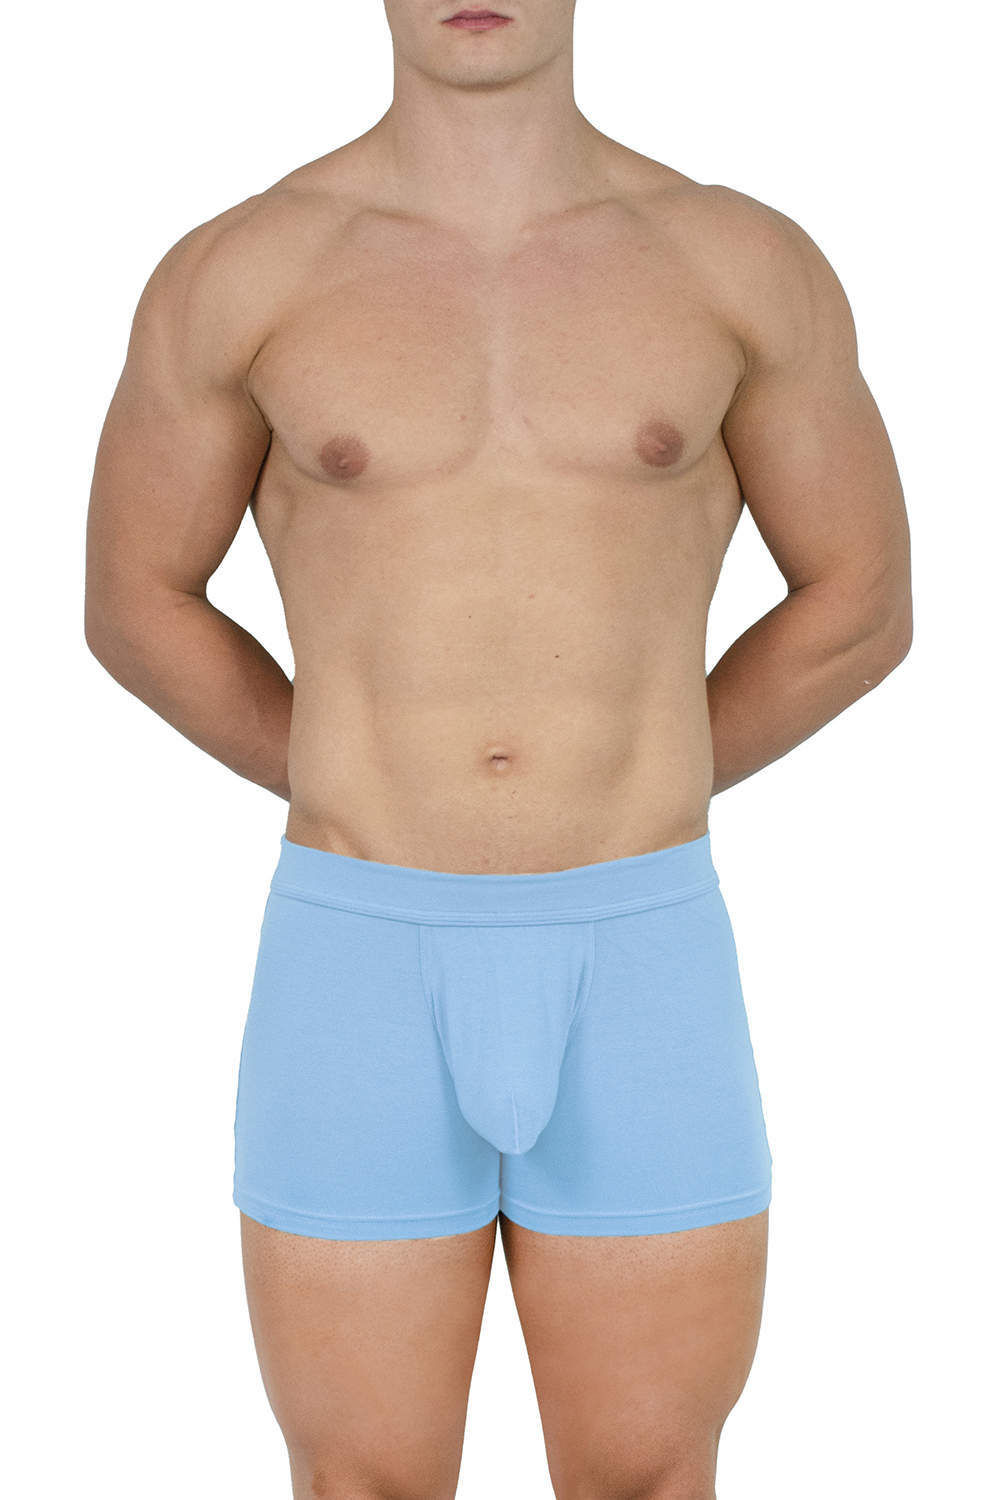 Obviously For Men Underwear at International Jock Underwear & Swimwear